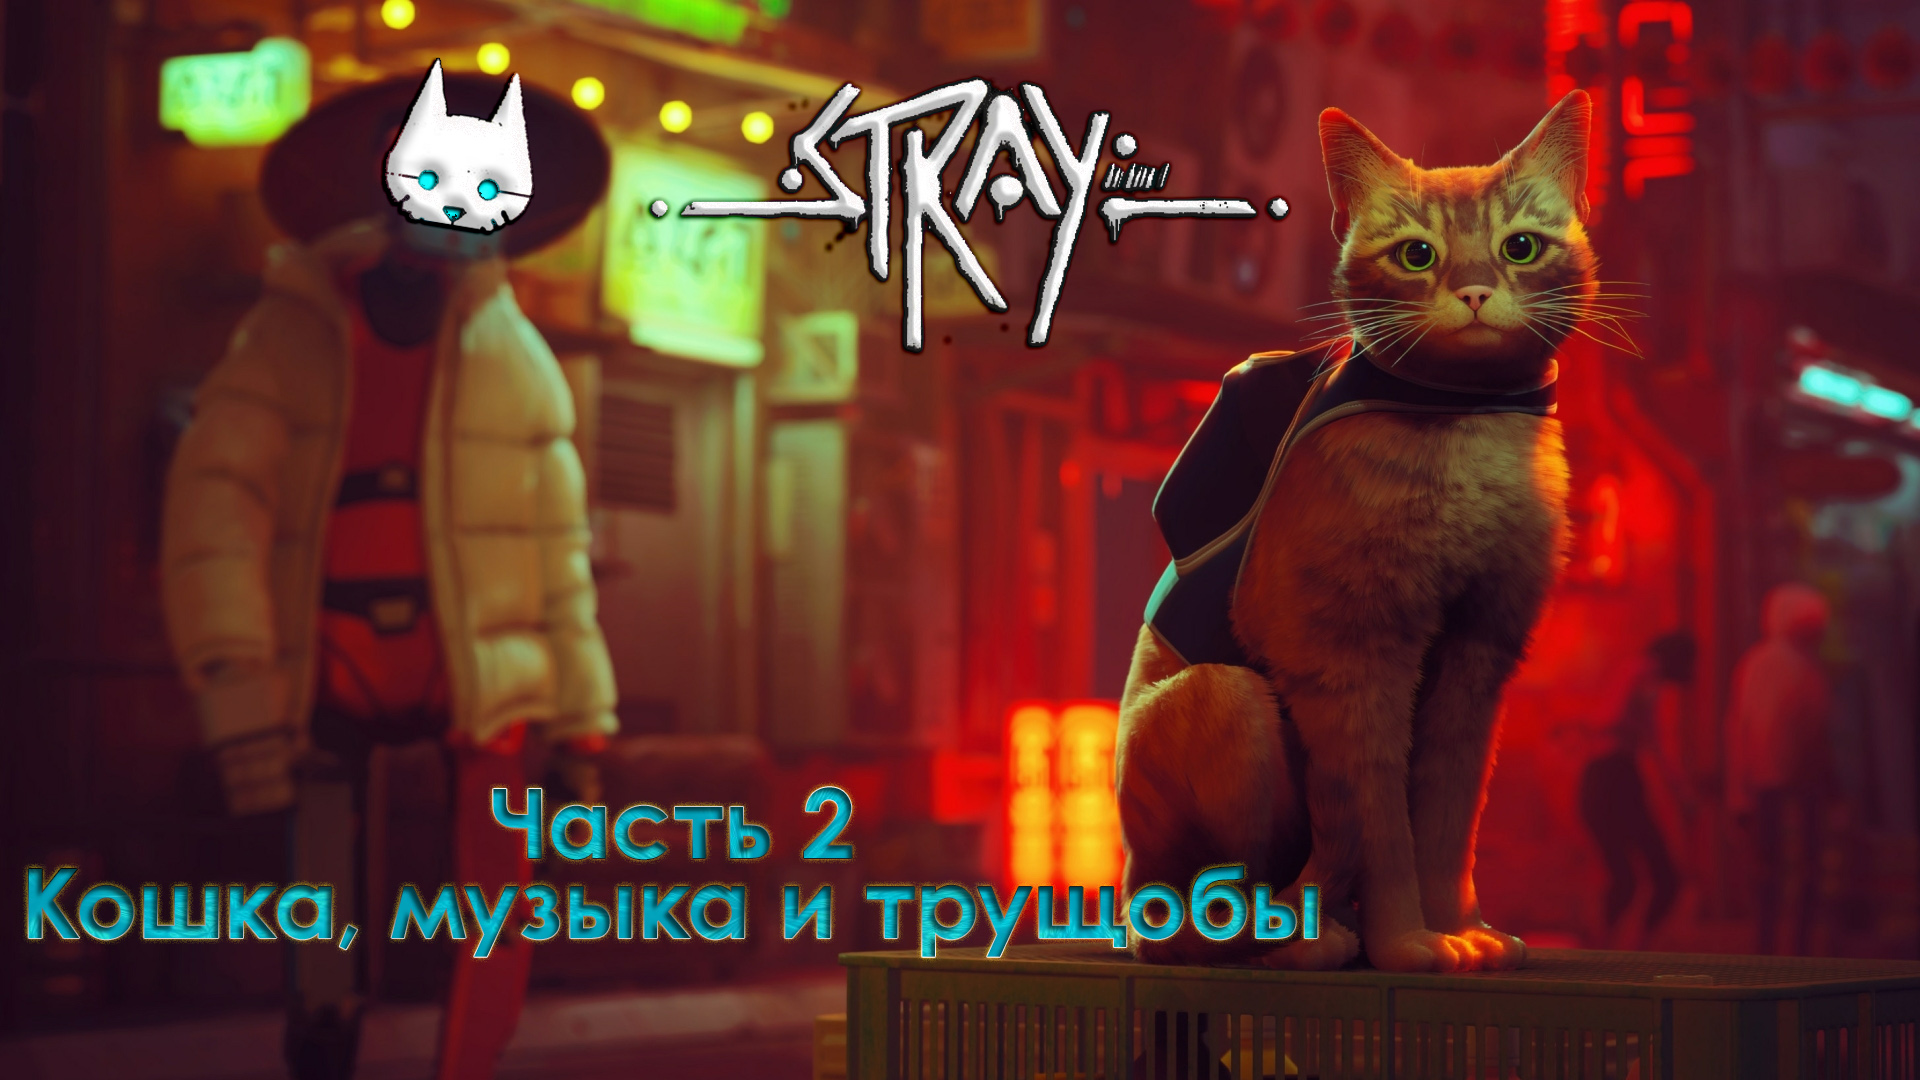 Кэтс песня. Stray трущобы. Stray Cat игра фото. Stray игра музыка. МОМО из игры Stray Cat.